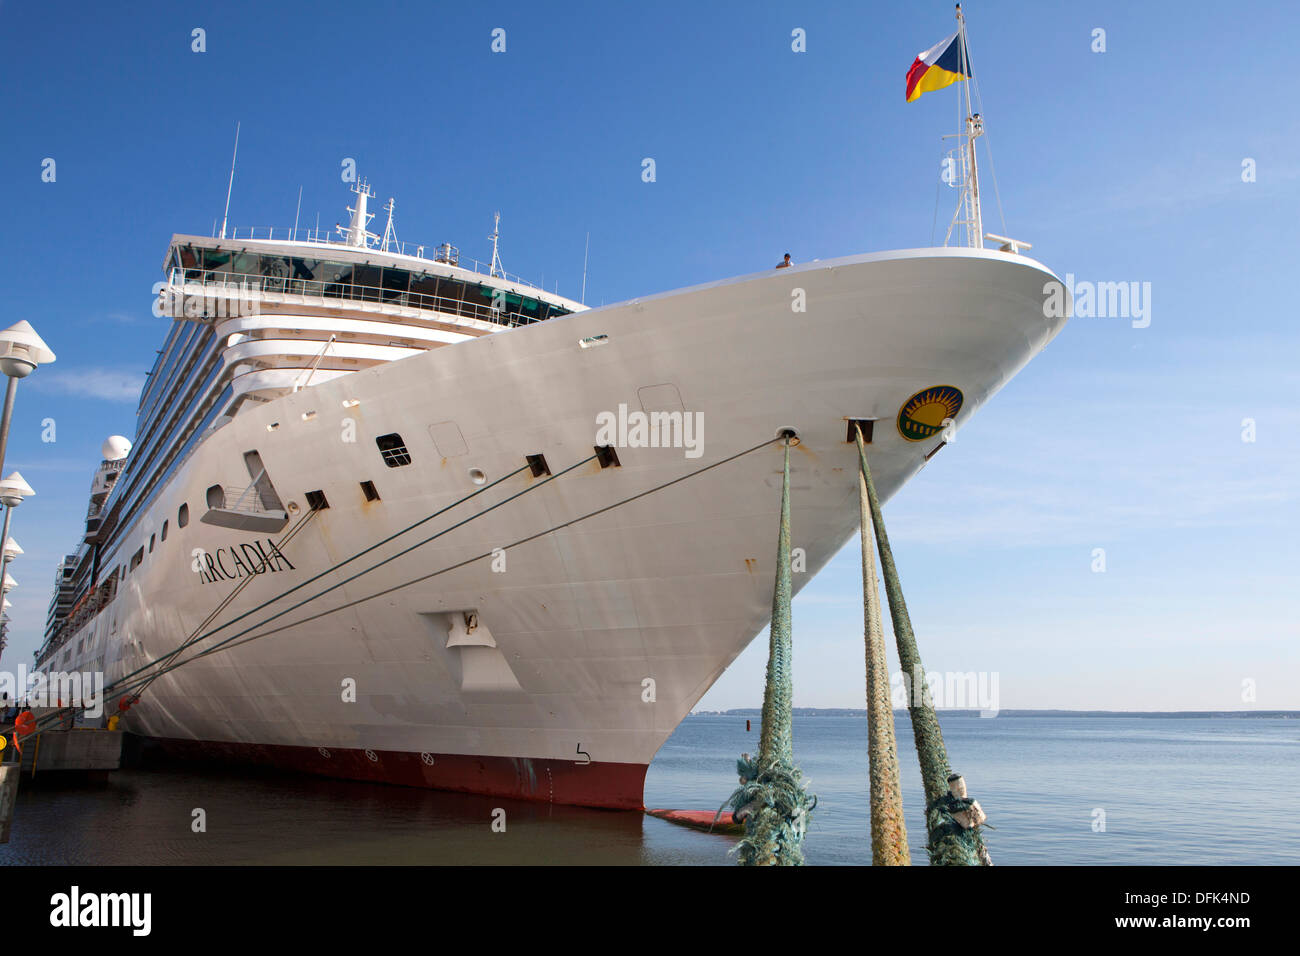 MS Arcadia cruise ship in the P&O Cruises fleet docked at Tallinn Estonia Stock Photo